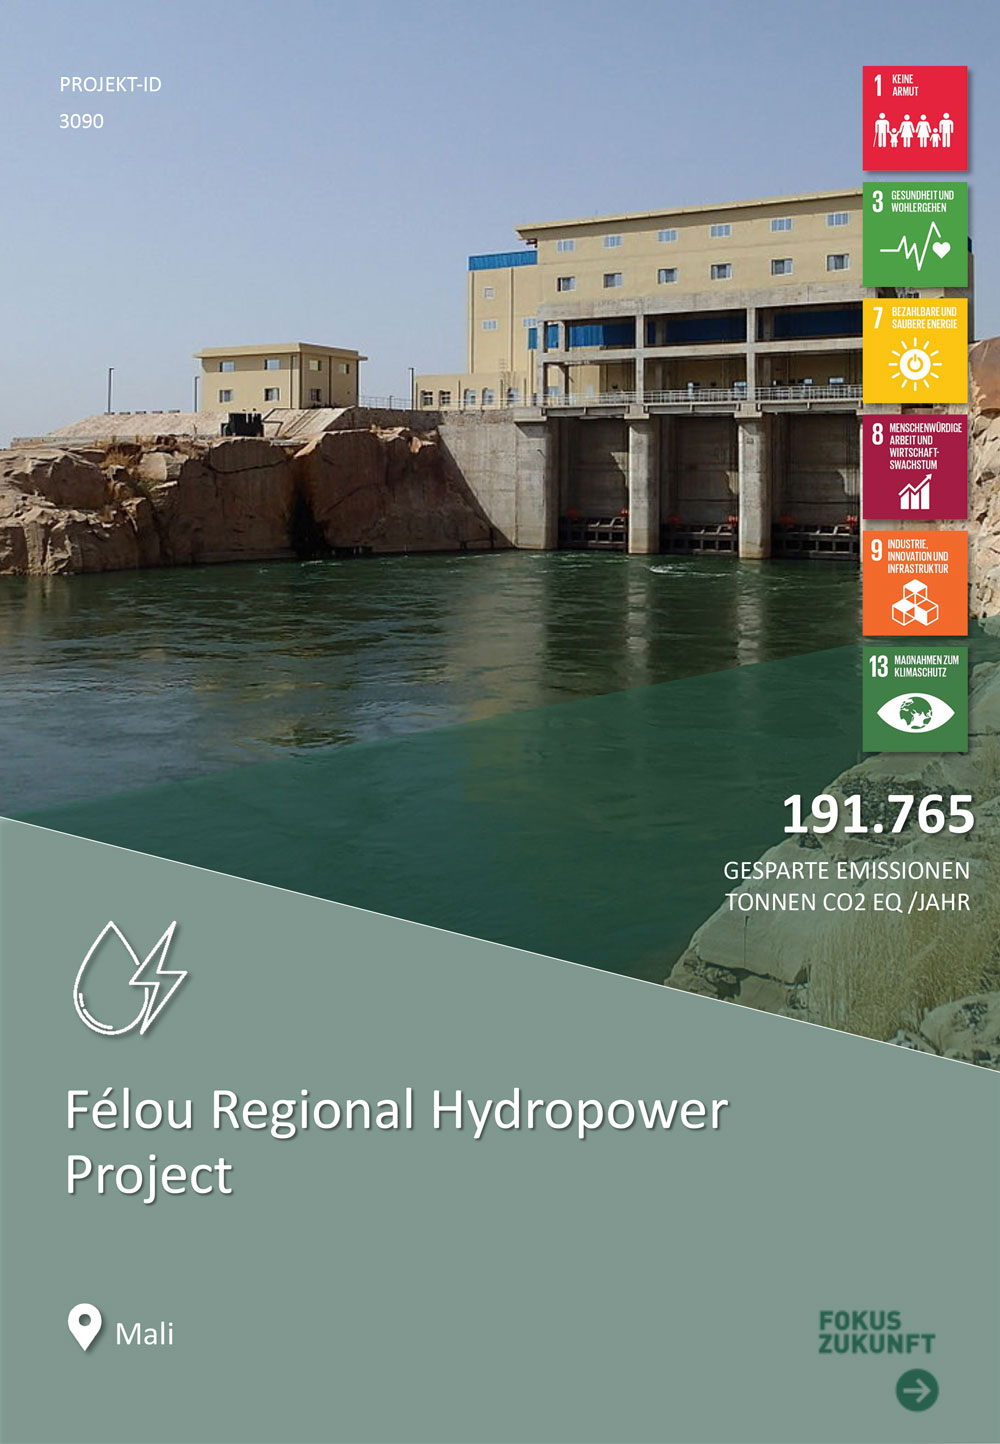 Félou Regional Hydropower Project